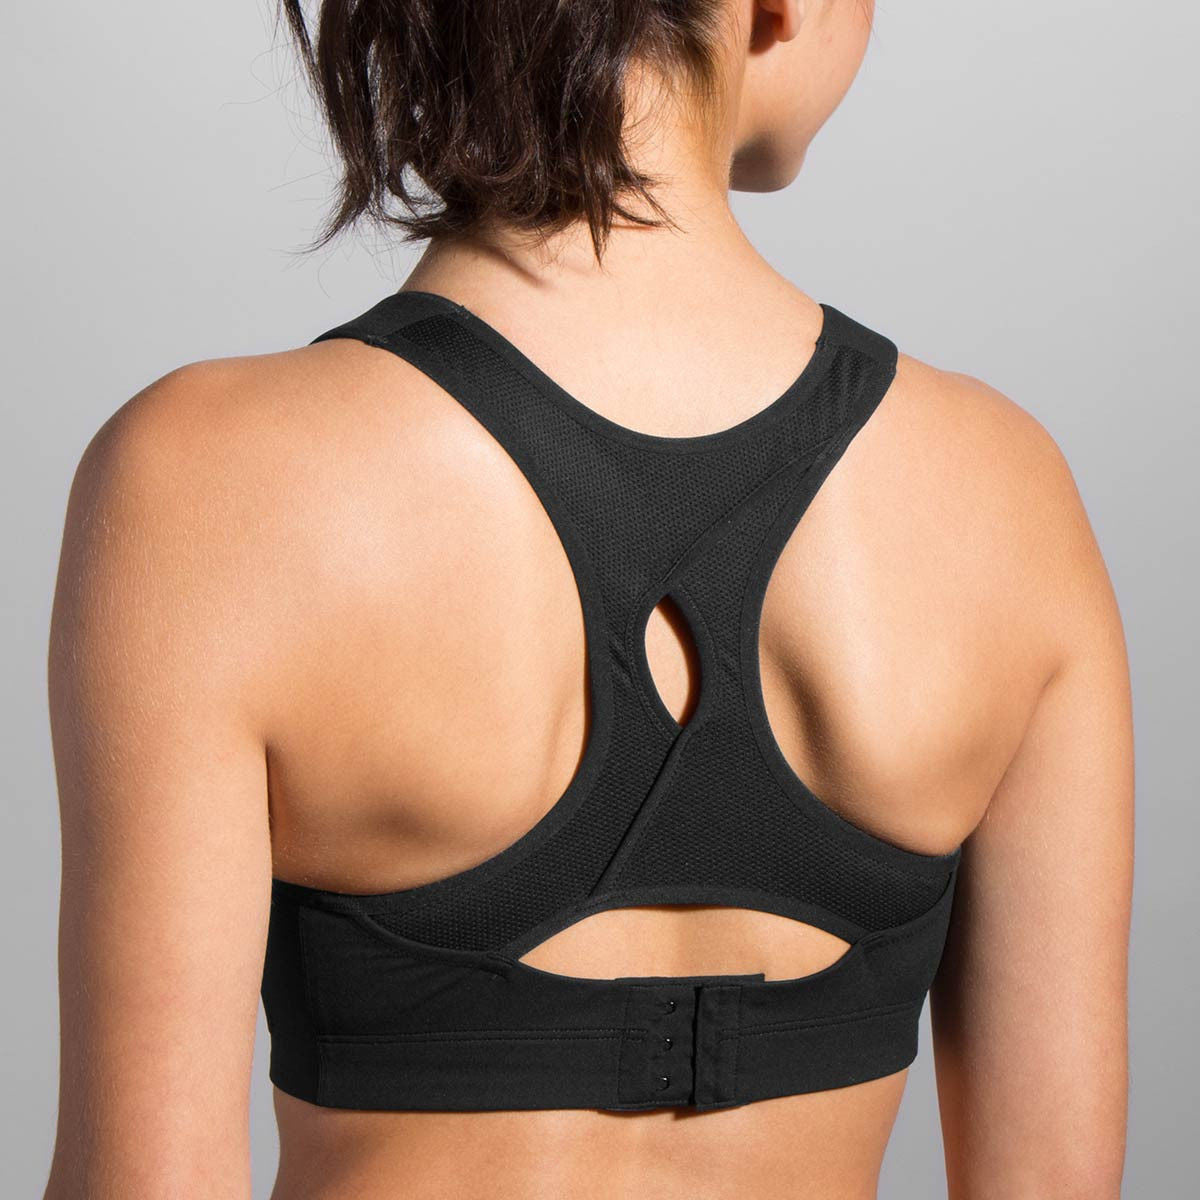 Motionwear small strappy back black gray sports bra full coverage